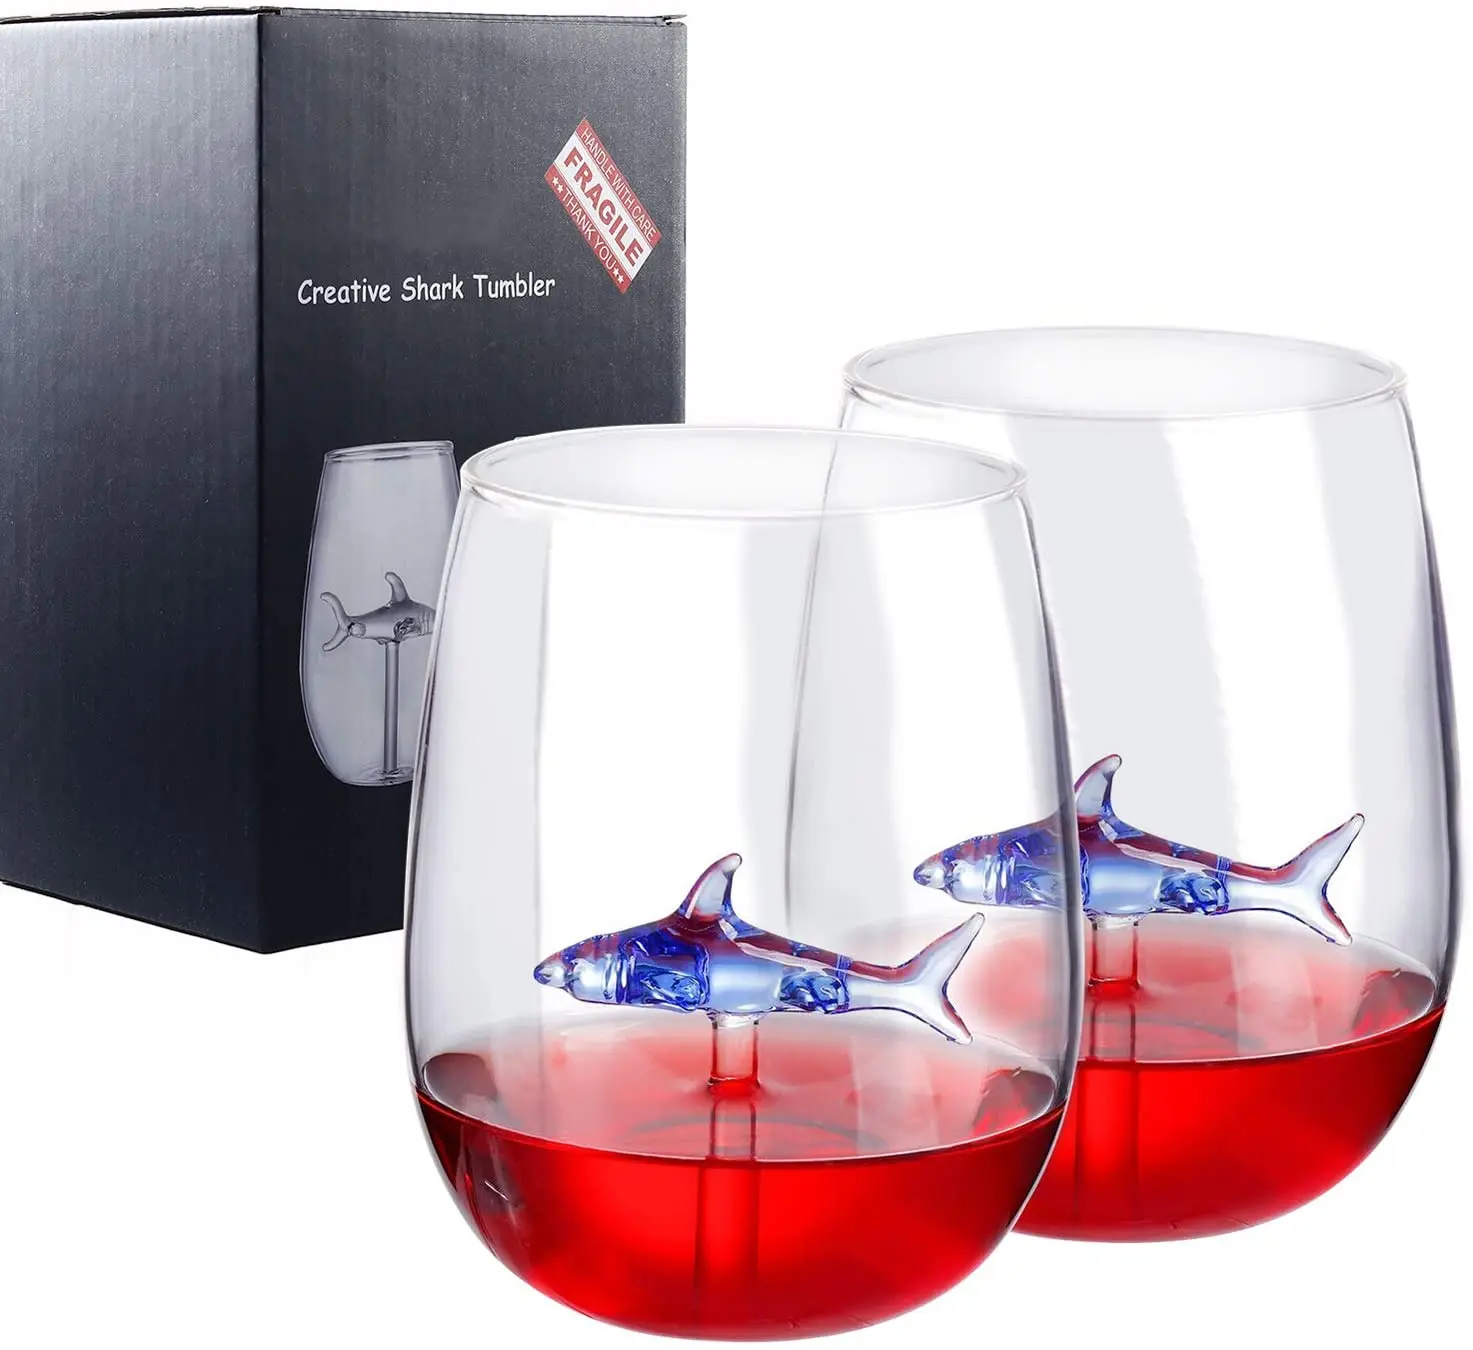 Бокалы Для Вина GENNISSY Shark набор из 2 бокалов для красного вина 300 мл/10 унций